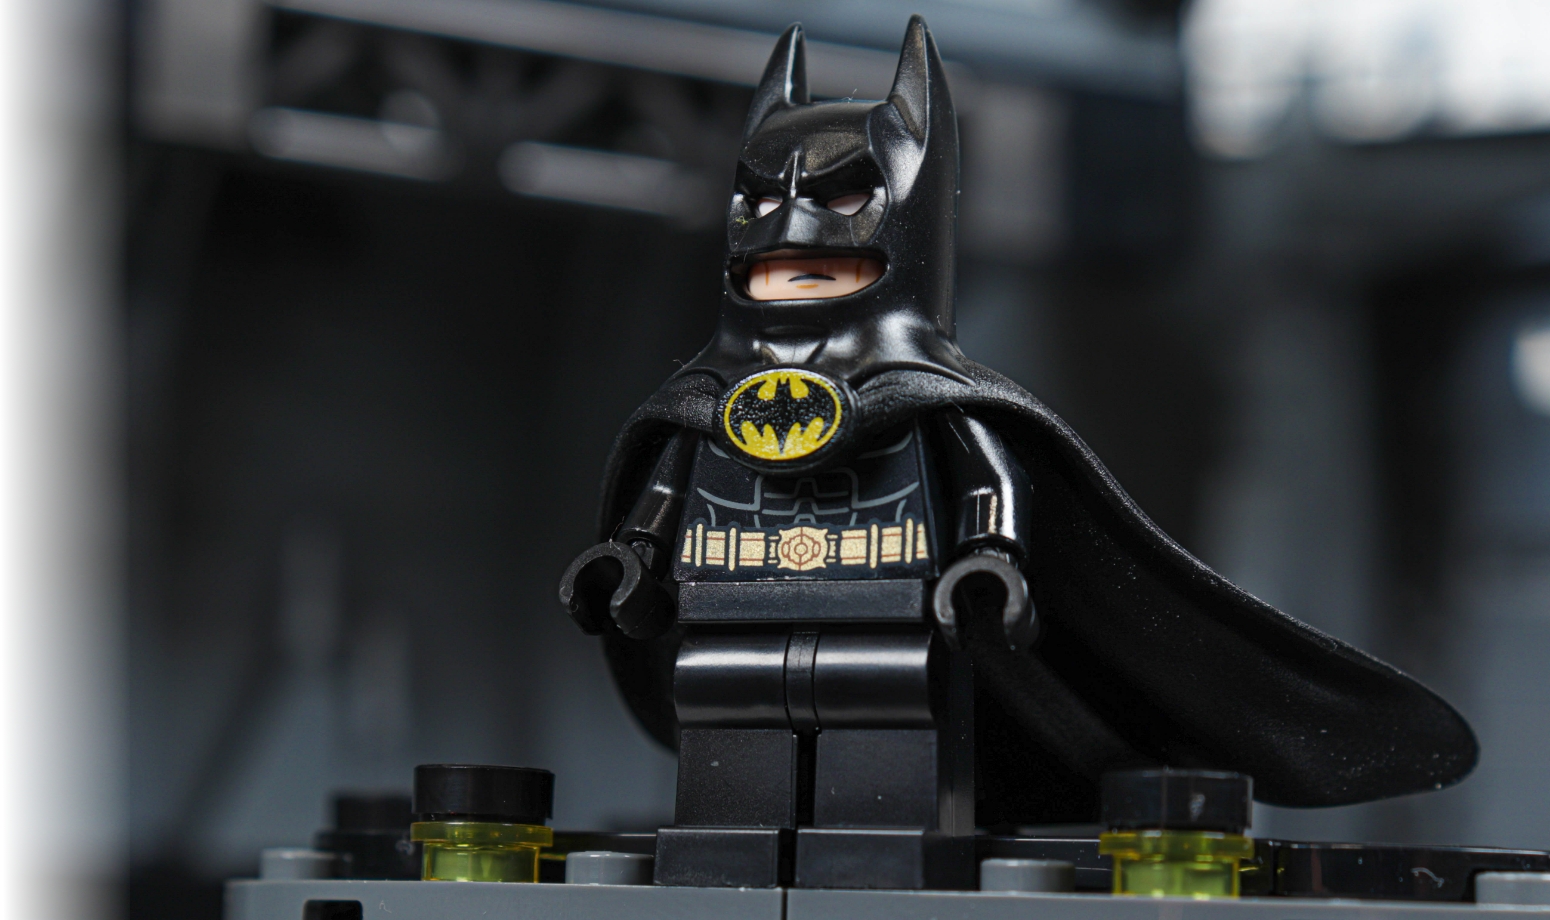 The Ultimate Batcave - The Lego Batman Movie  Lego batman movie, Lego  batman, Batman lego sets